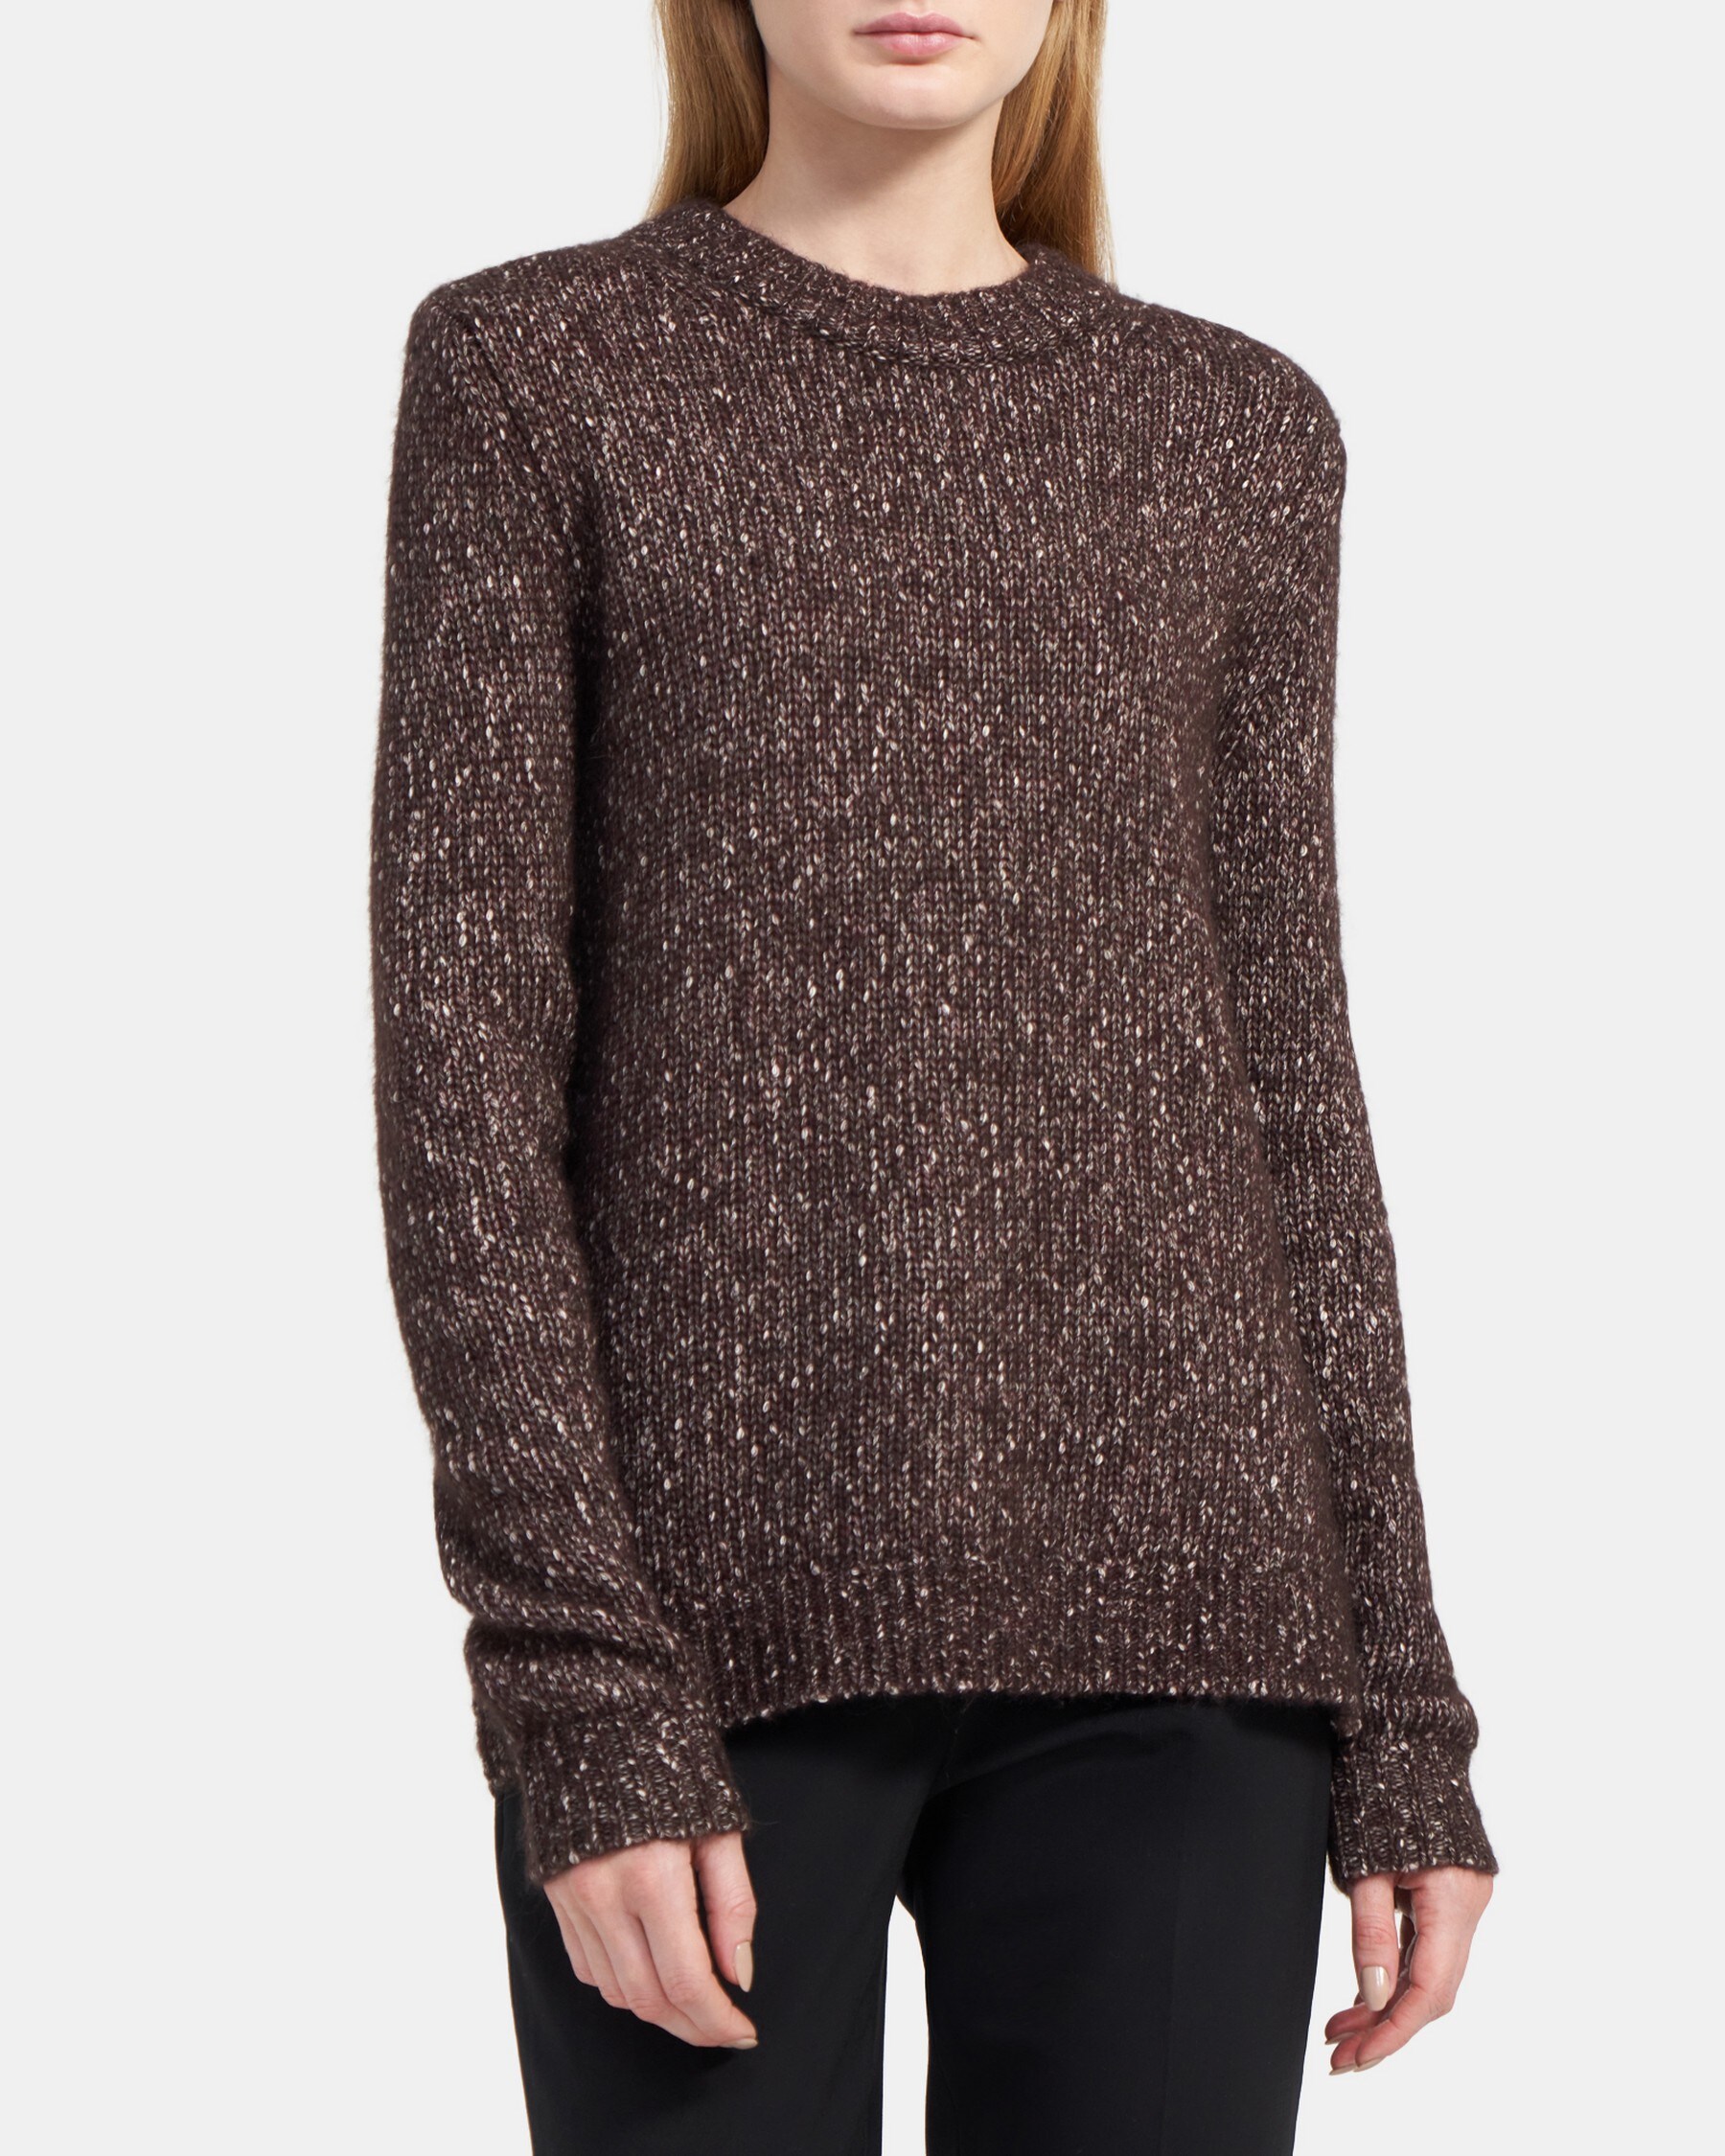 Speckled Crewneck Sweater in Tweed Alpaca